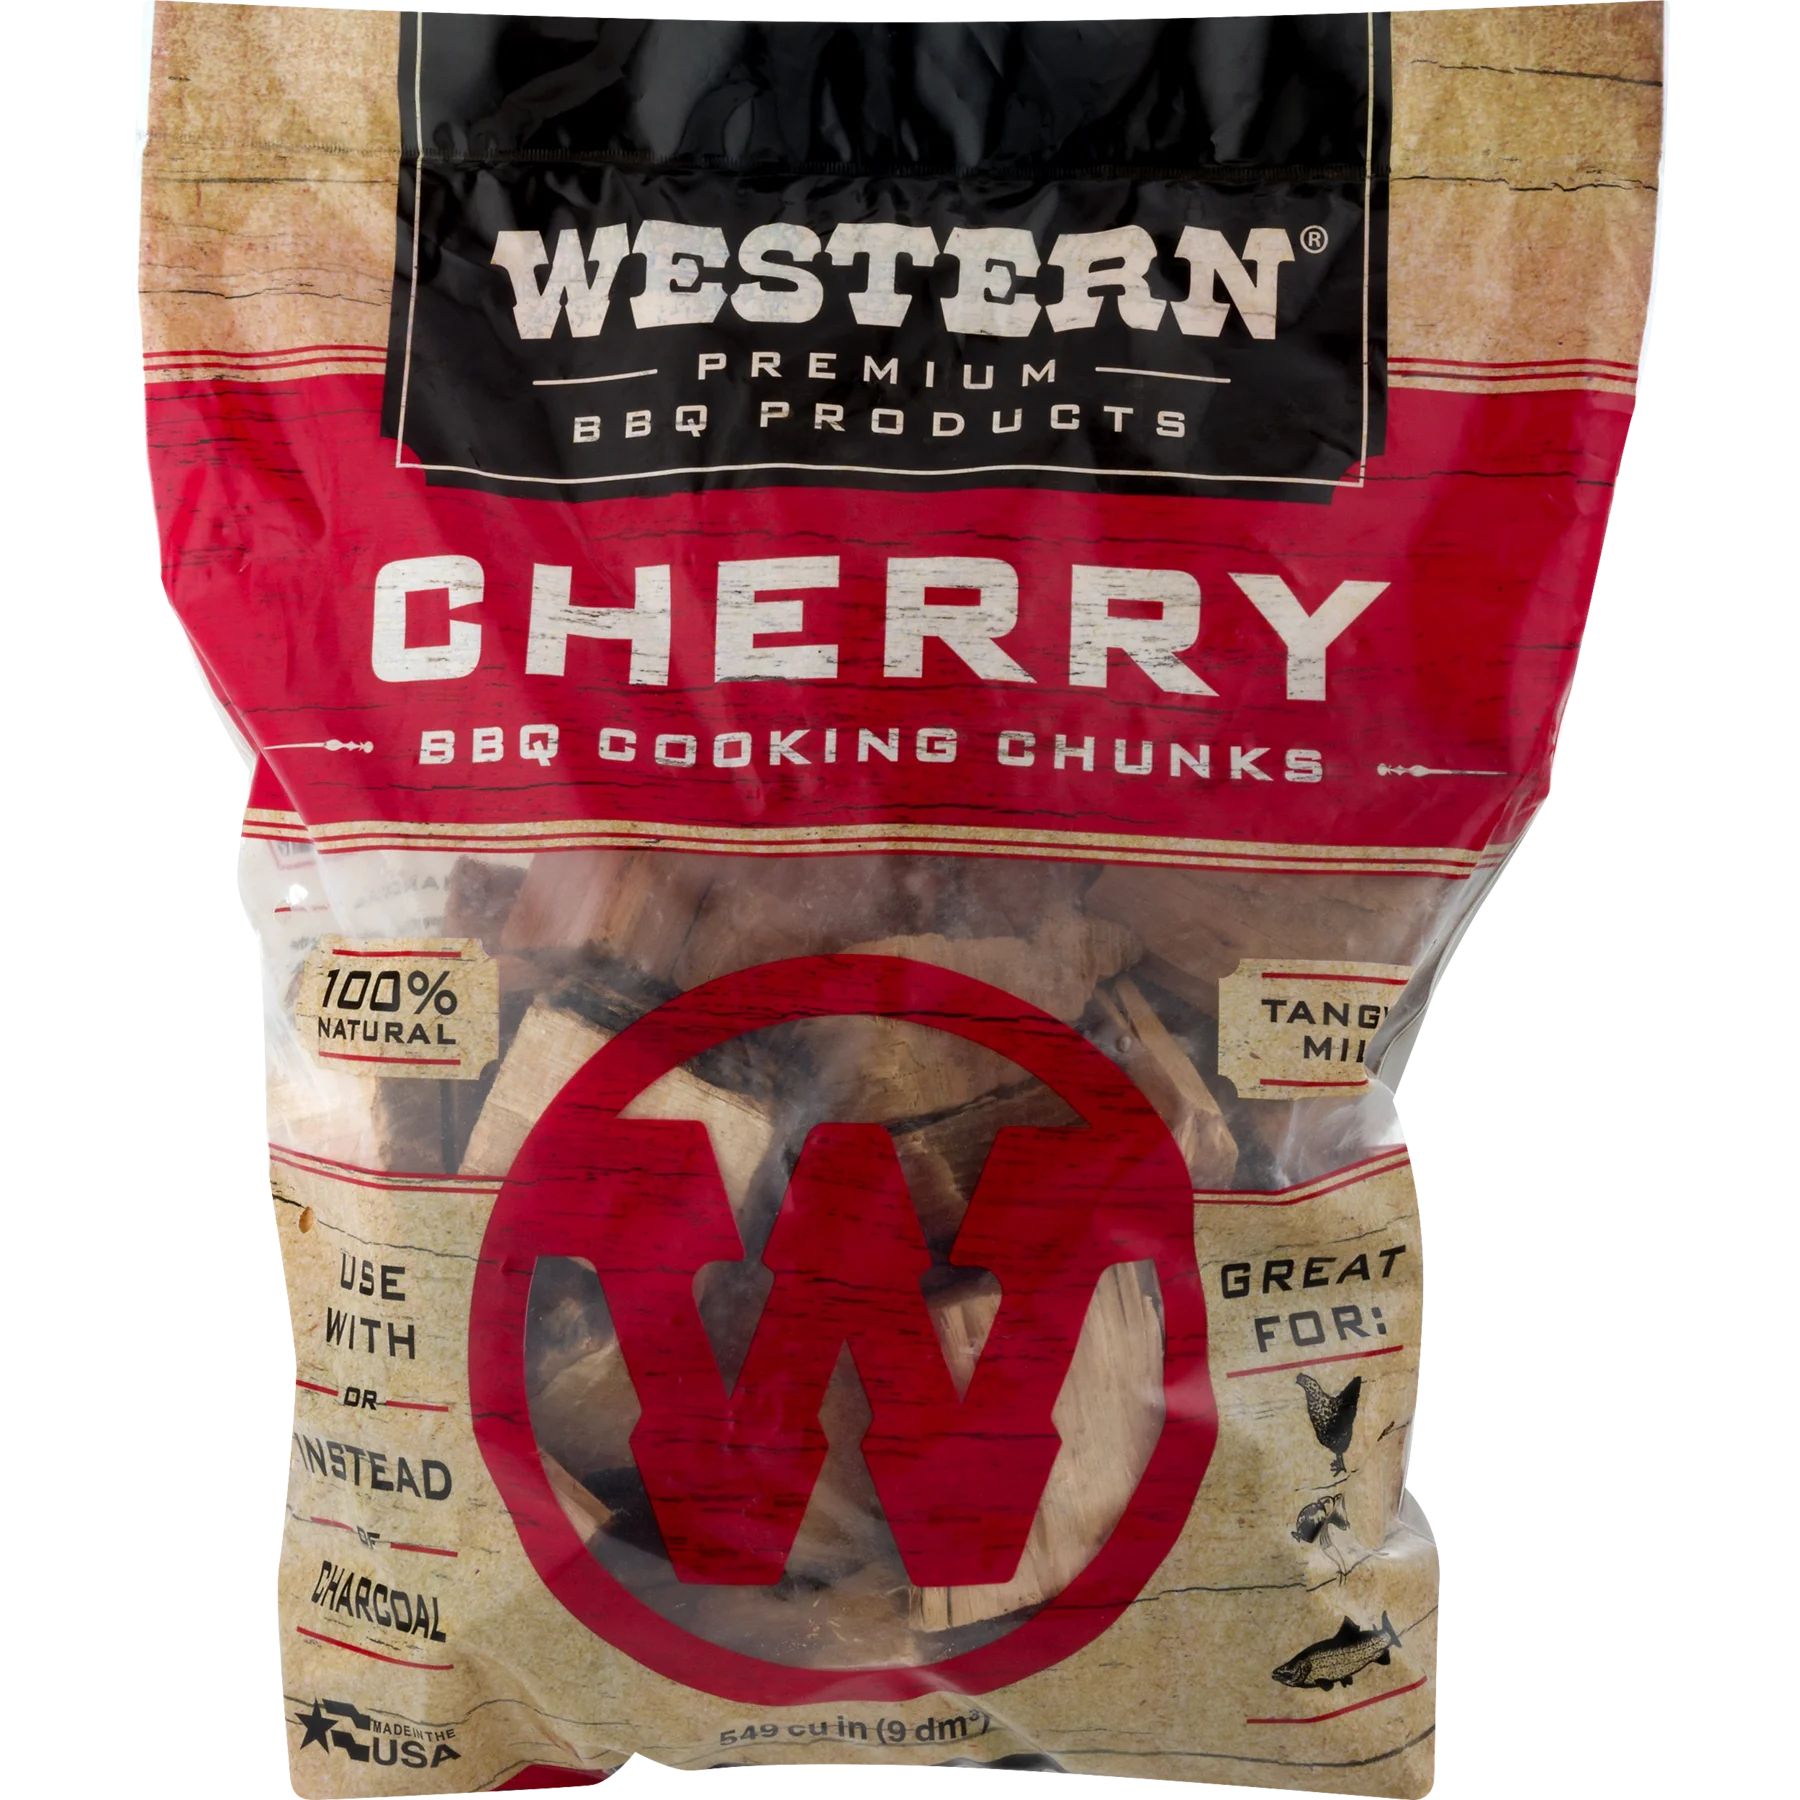 Western Premium BBQ Products Cherry BBQ Cooking Chunks, 549 cu in | Walmart (US)